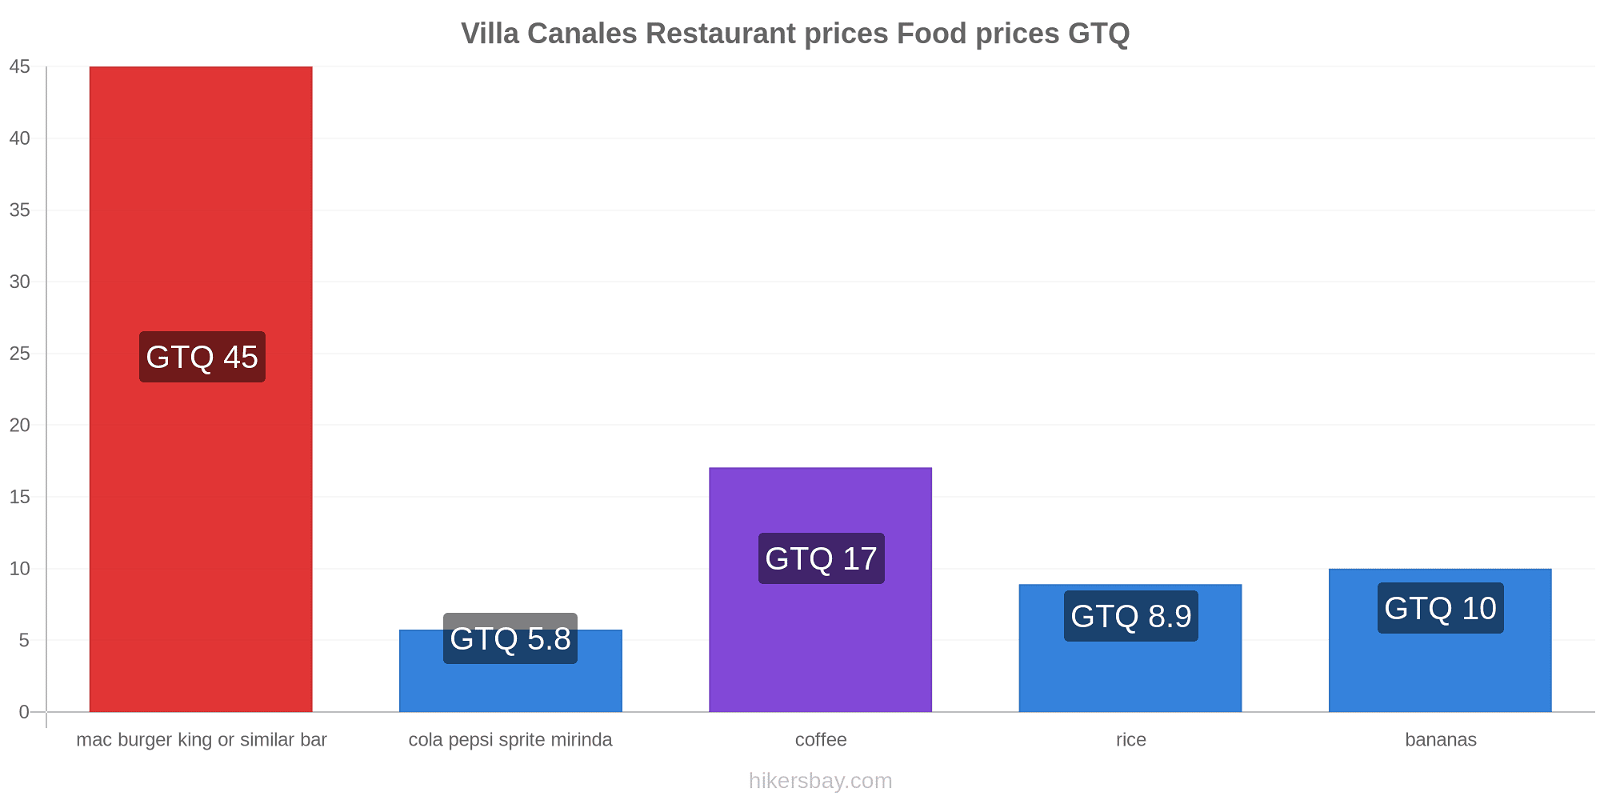 Villa Canales price changes hikersbay.com